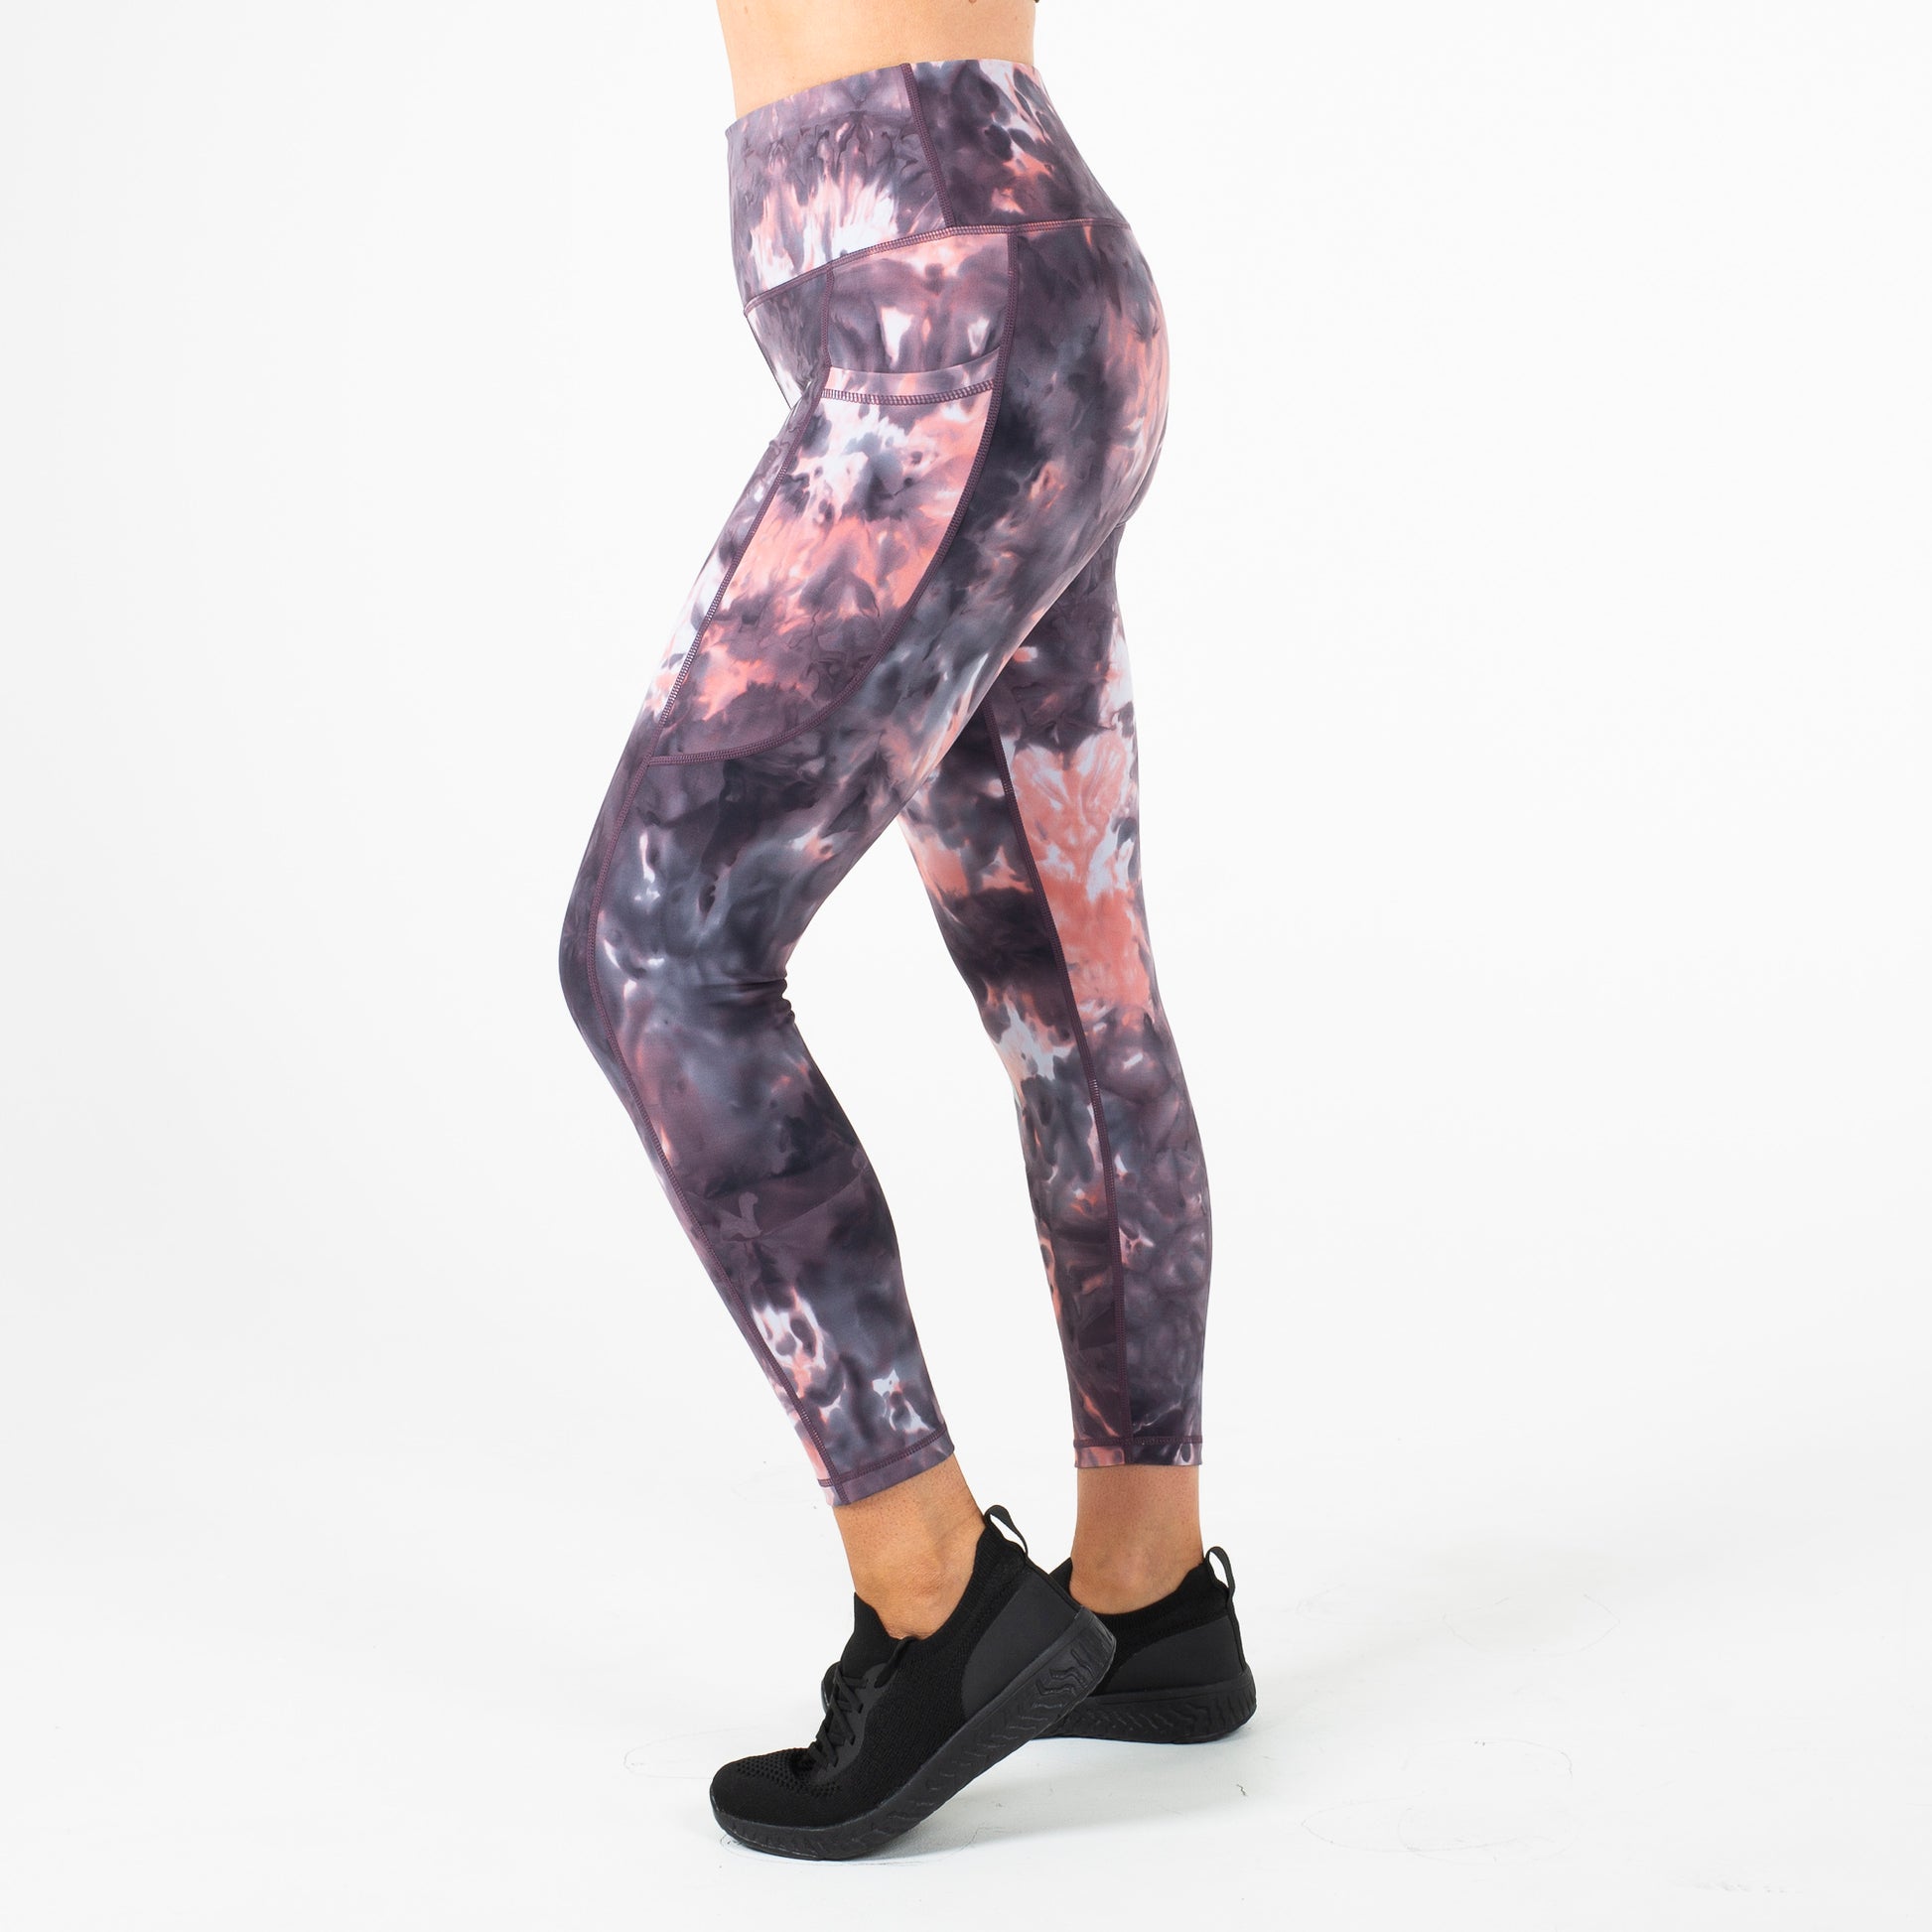 YOGA LEGGINGS - Leggings with Pocket - Batik, Tie-Dye - dark purple-pink